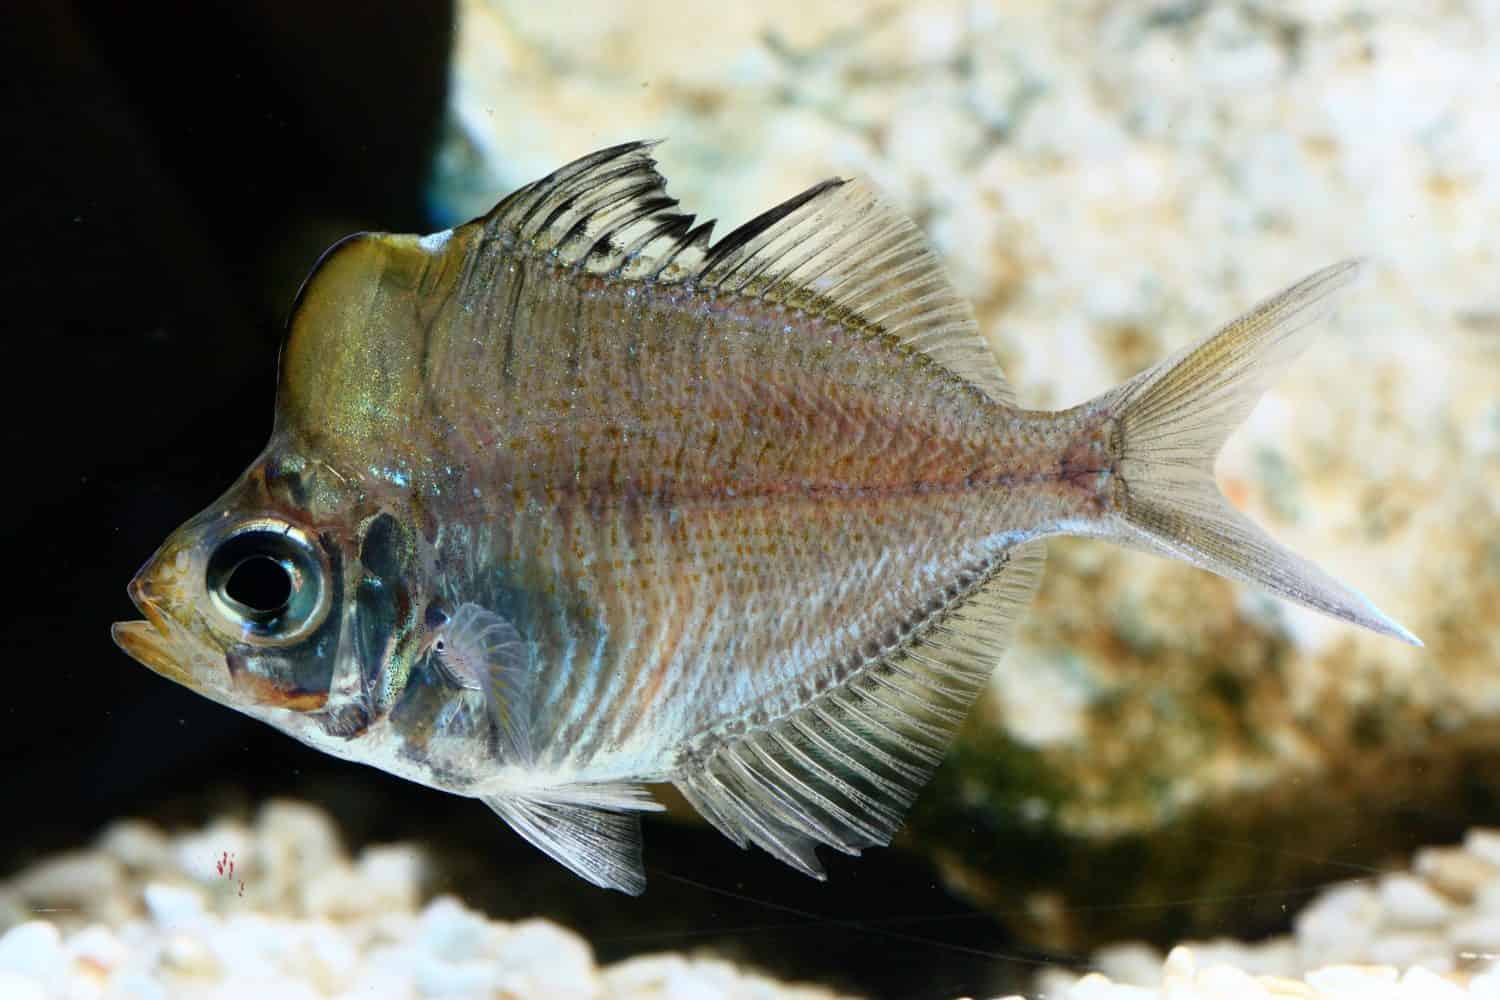 Humpheaded glassfish